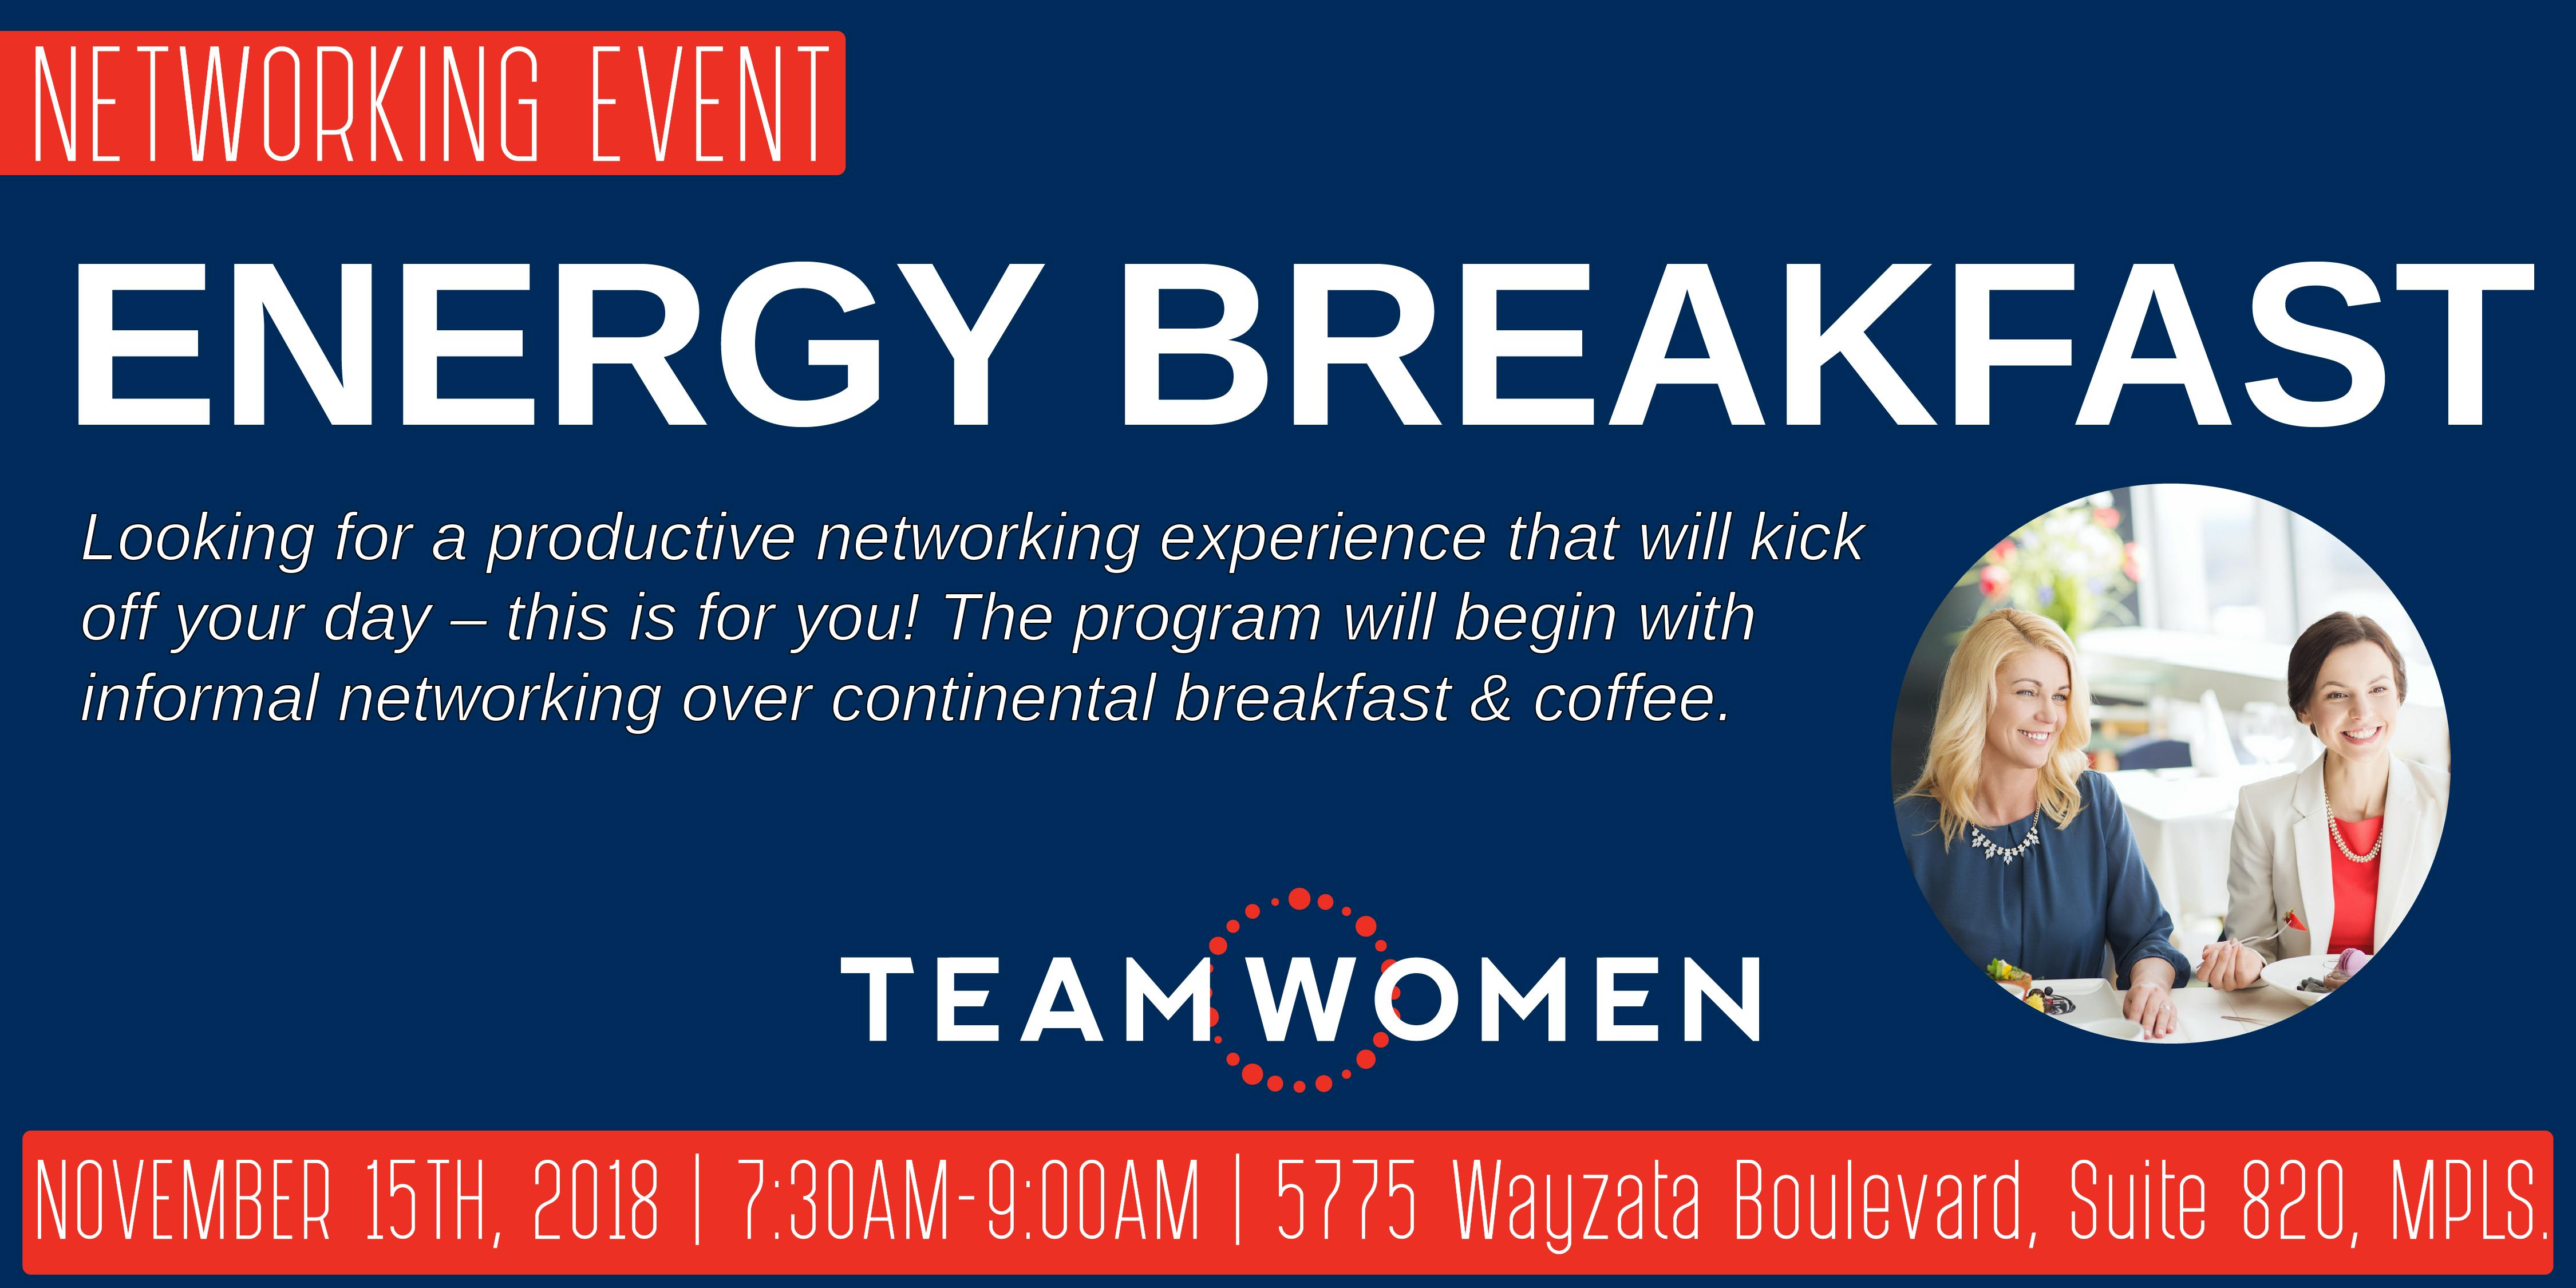 Energy Breakfast Networking with TeamWomen - November